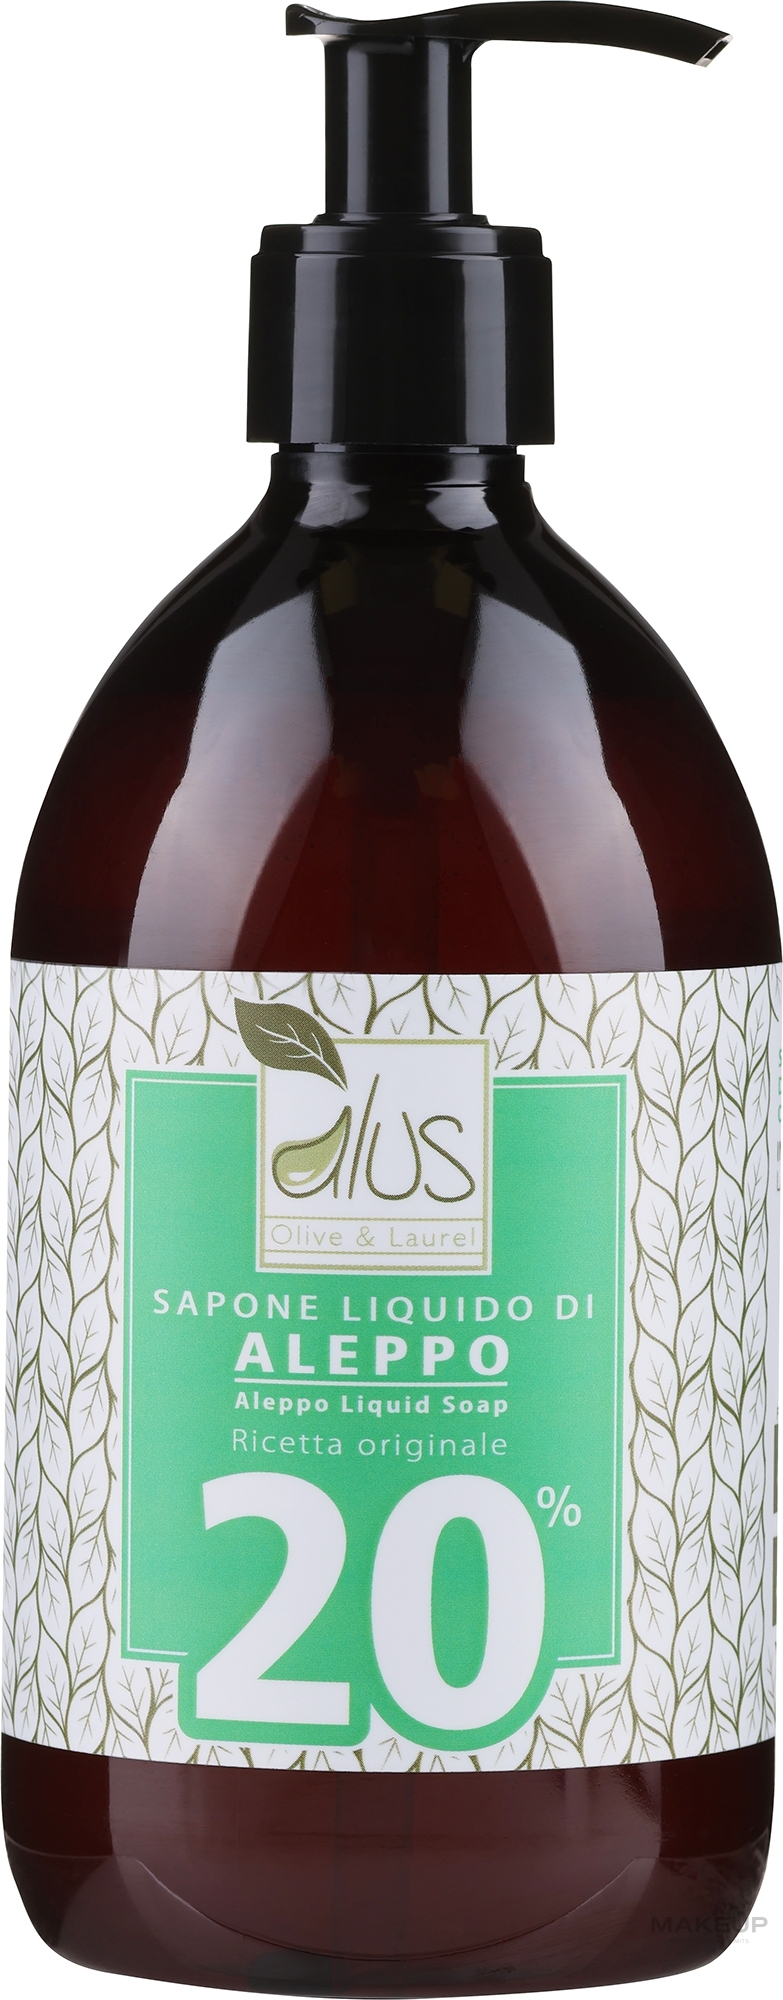 Aleppo-Flüssigseife 20% - Himalaya dal 1989 Alus Aleppo Liquid Soap 20% Laurel Oil — Bild 500 ml